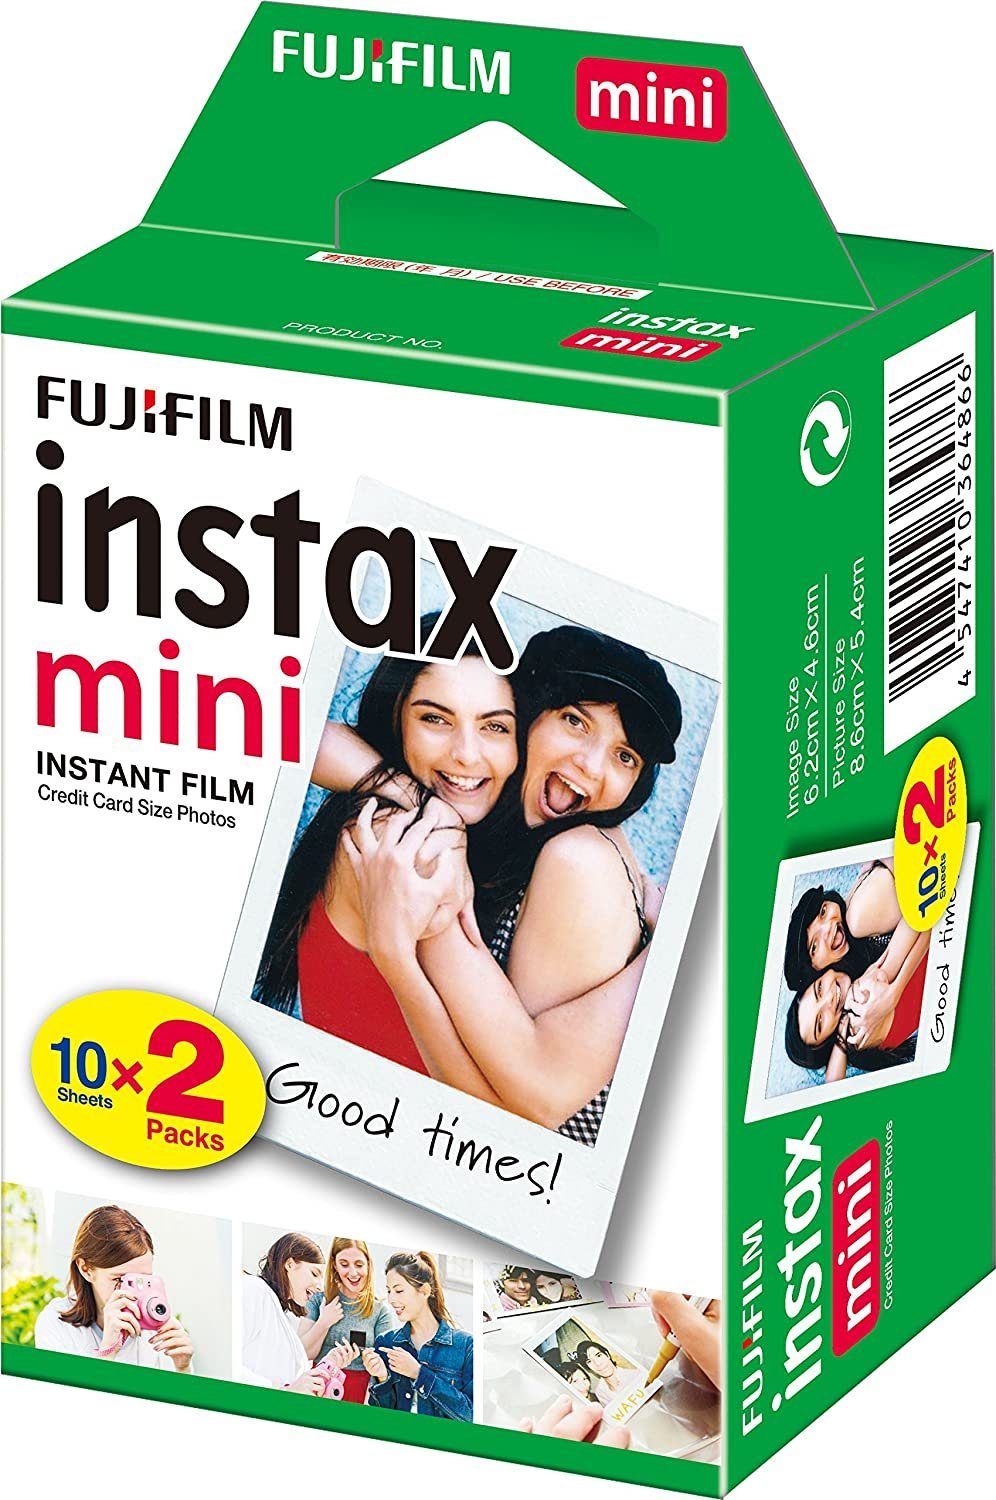 dawecom-24 Fujifilm Instax Mini Instant Film Doppelpack - 2x 10 Aufnahmen für Sofortbildkamera